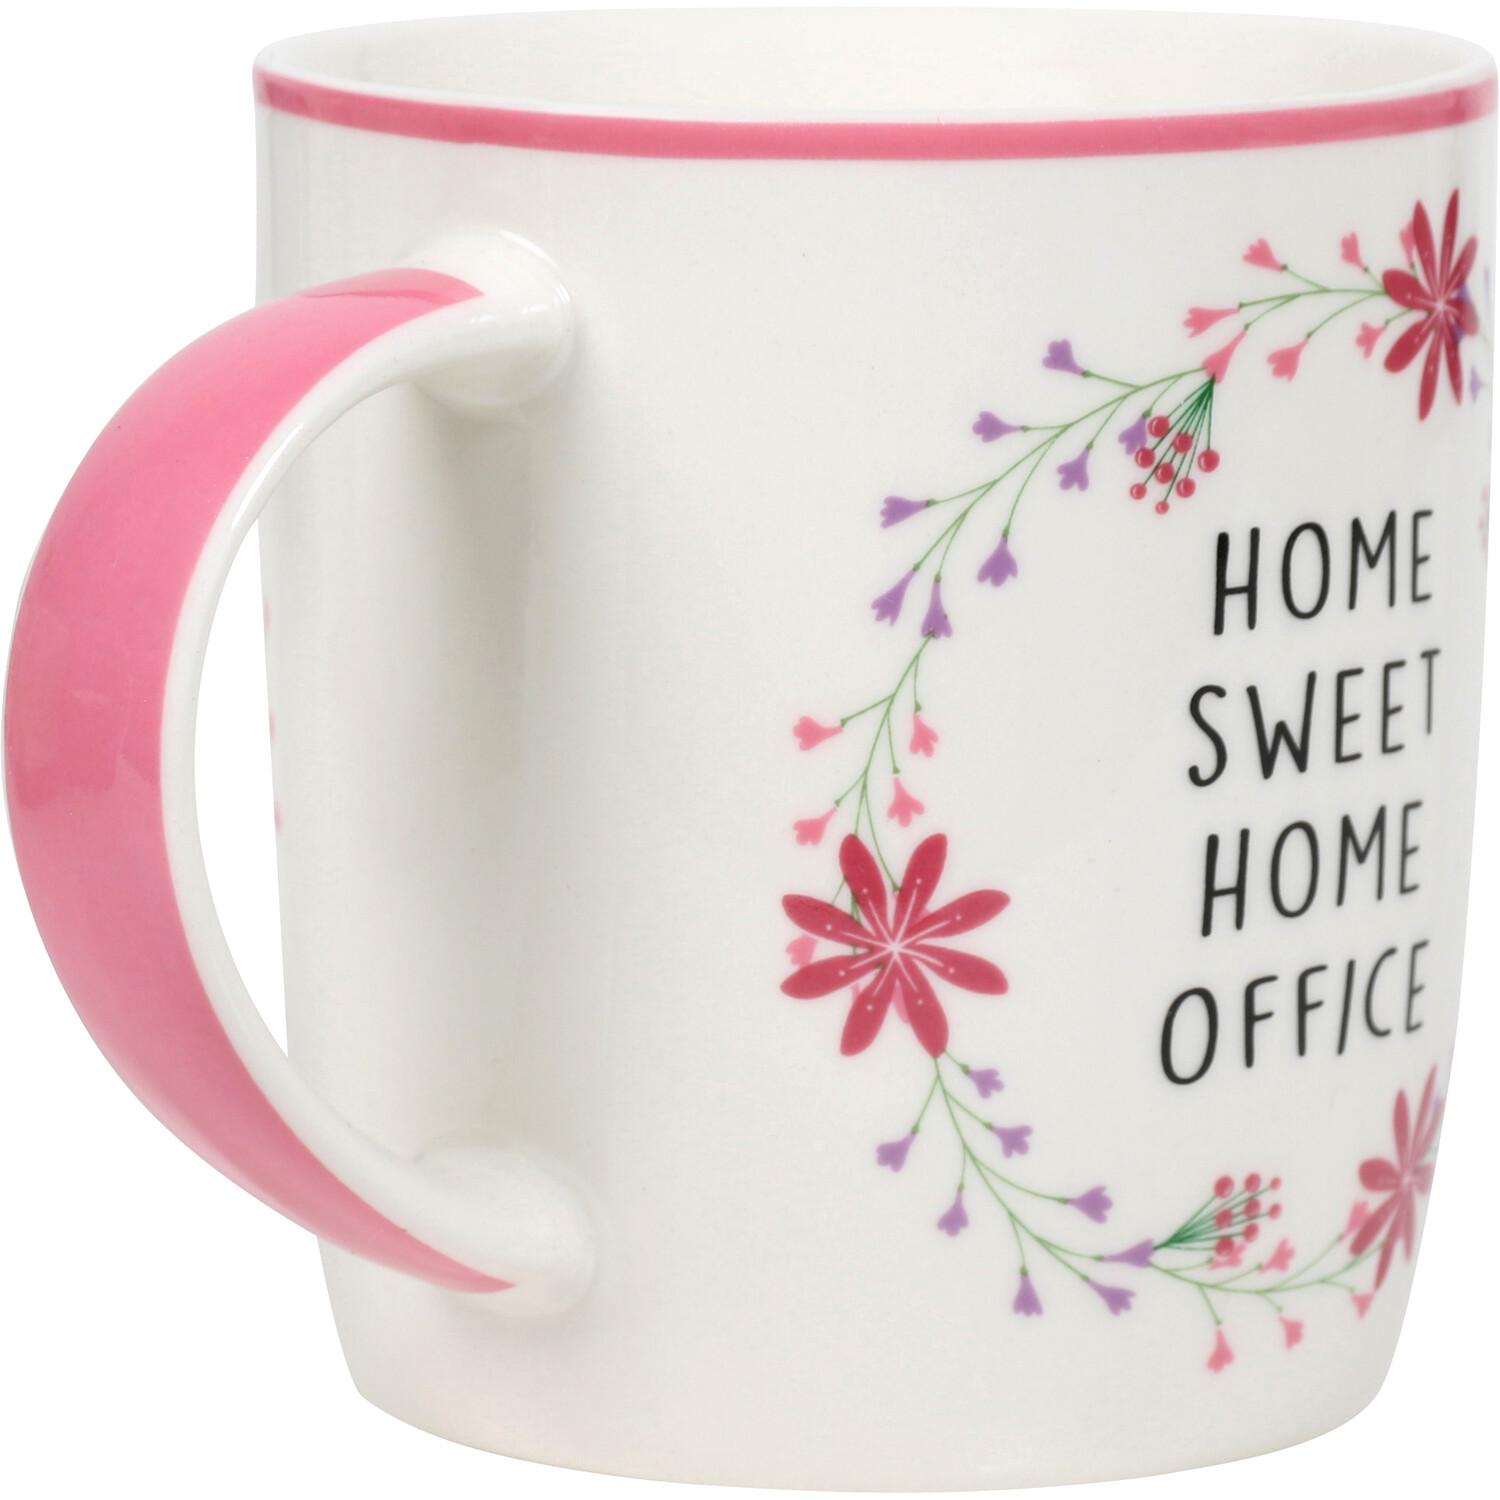 Home Sweet Home Office Mug - Pink Image 4